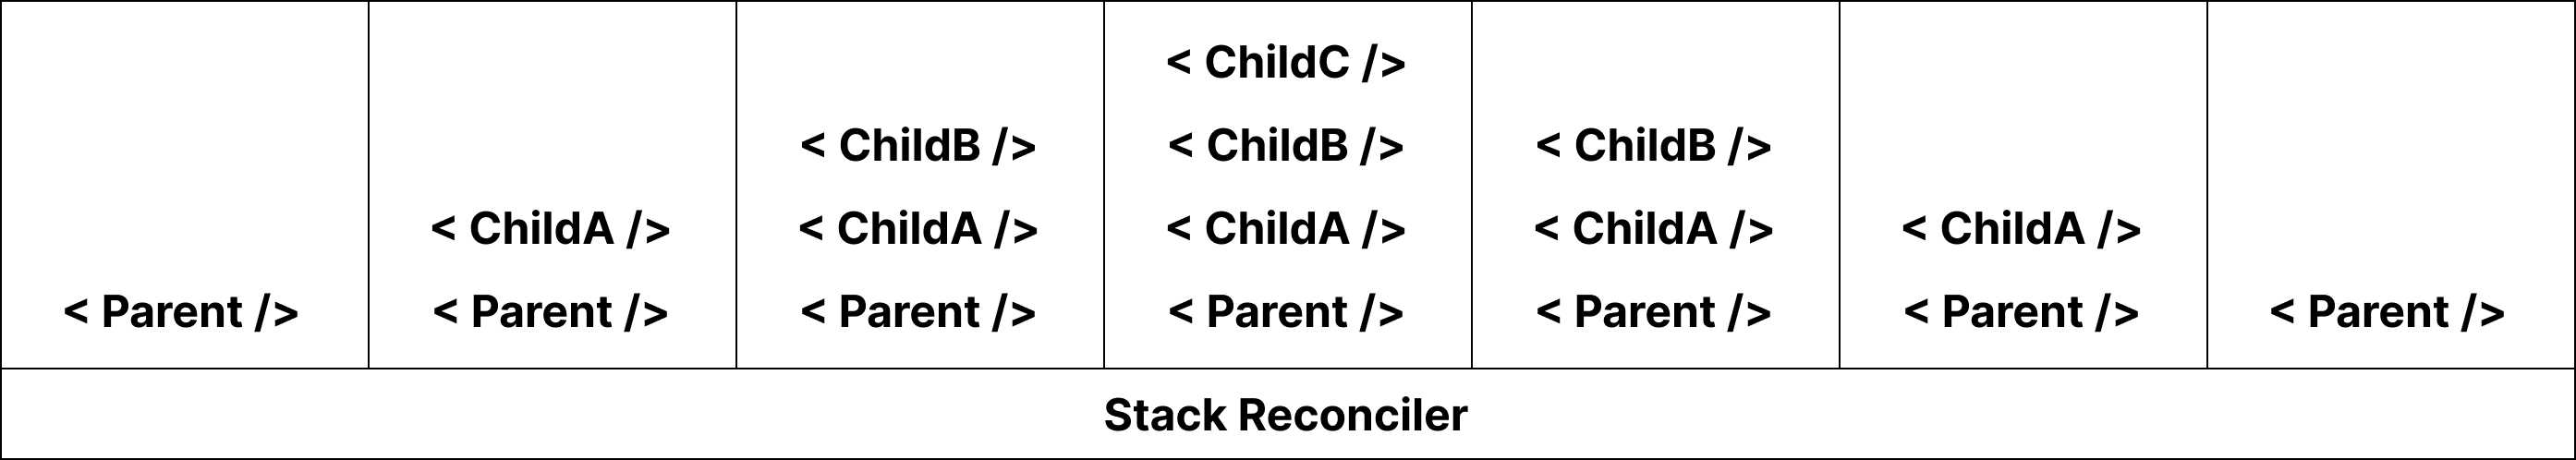 Stack Reconciler